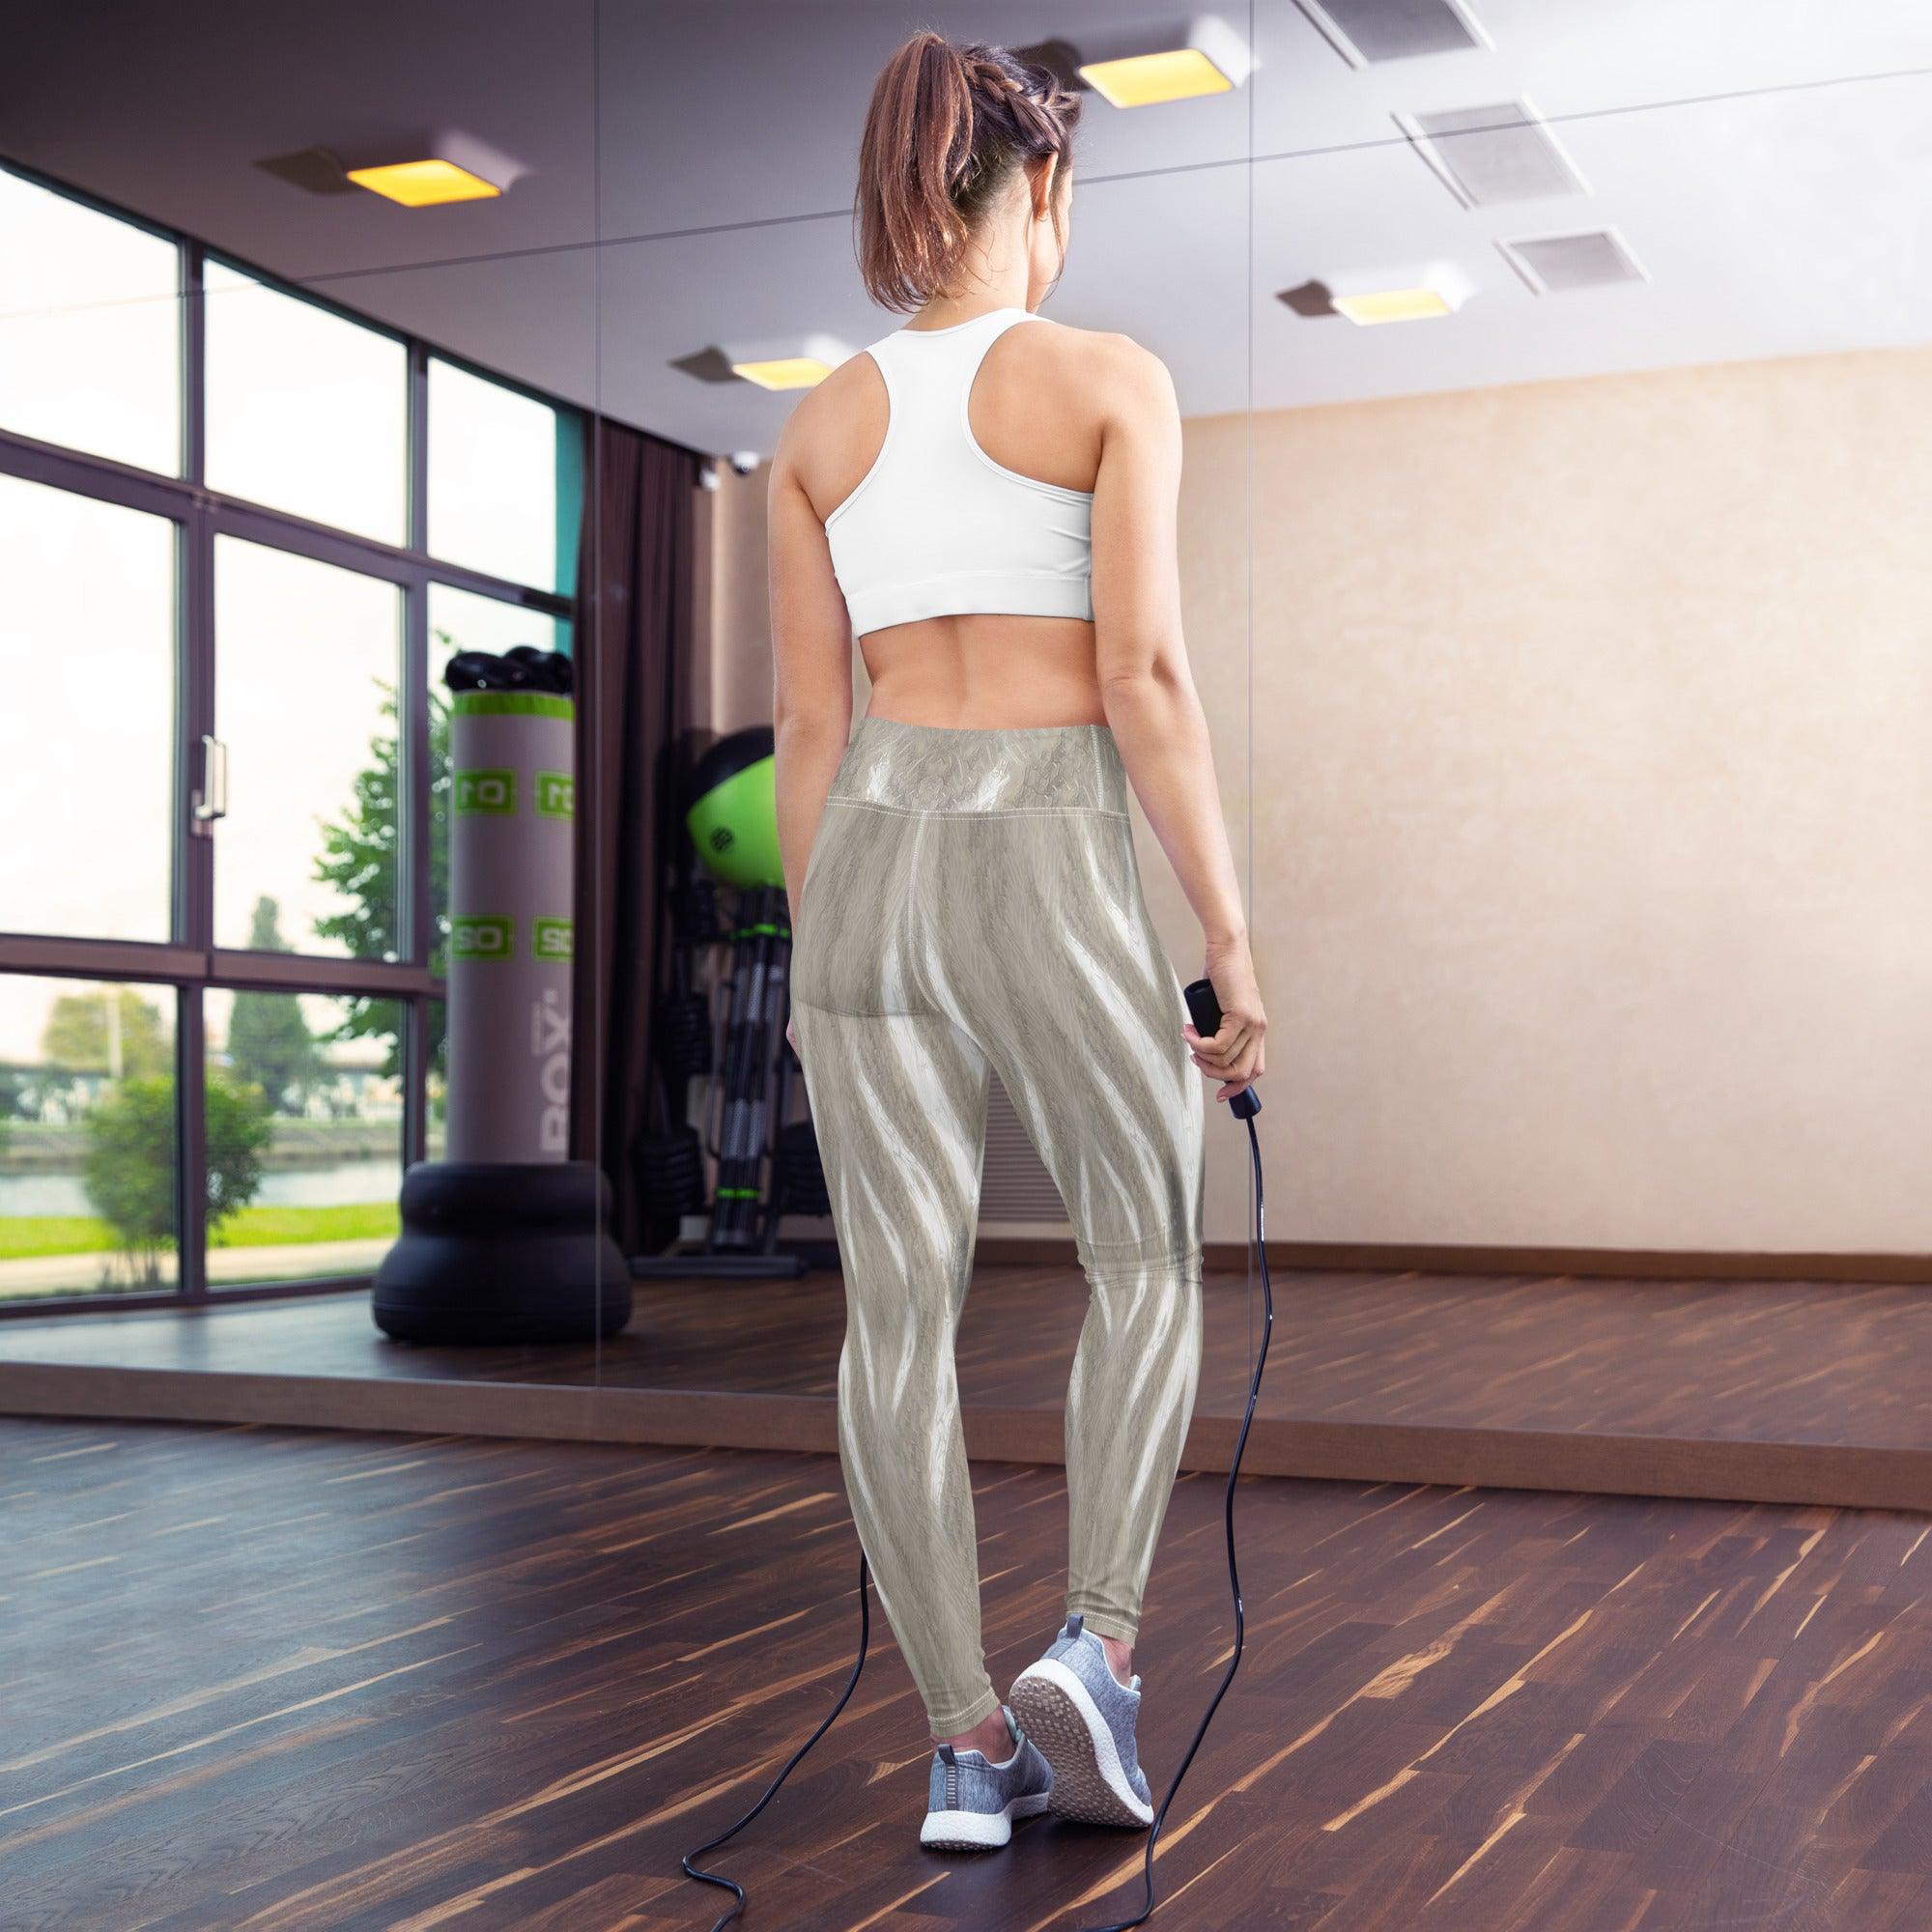 Flexible and comfortable Illustrative Innovation Yoga Leggings for workouts.